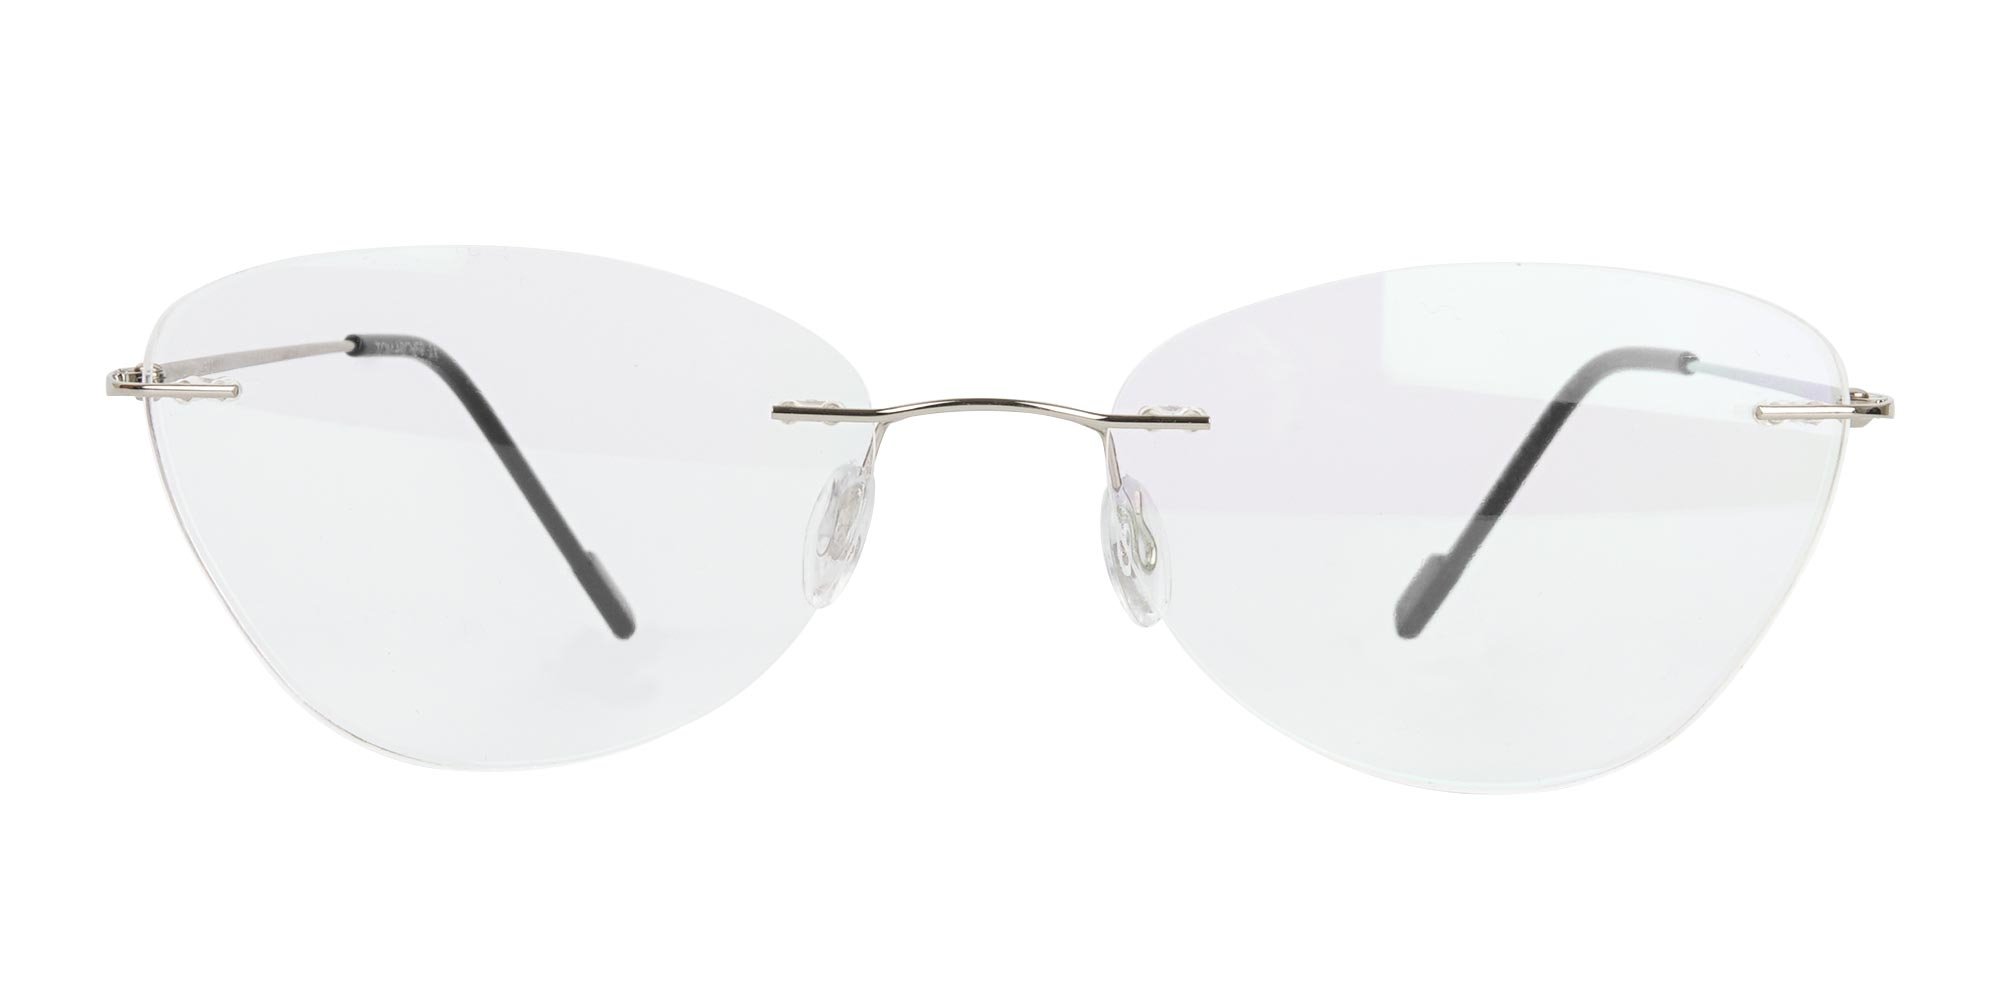 10 Glasses For Square Faces Zenni Optical